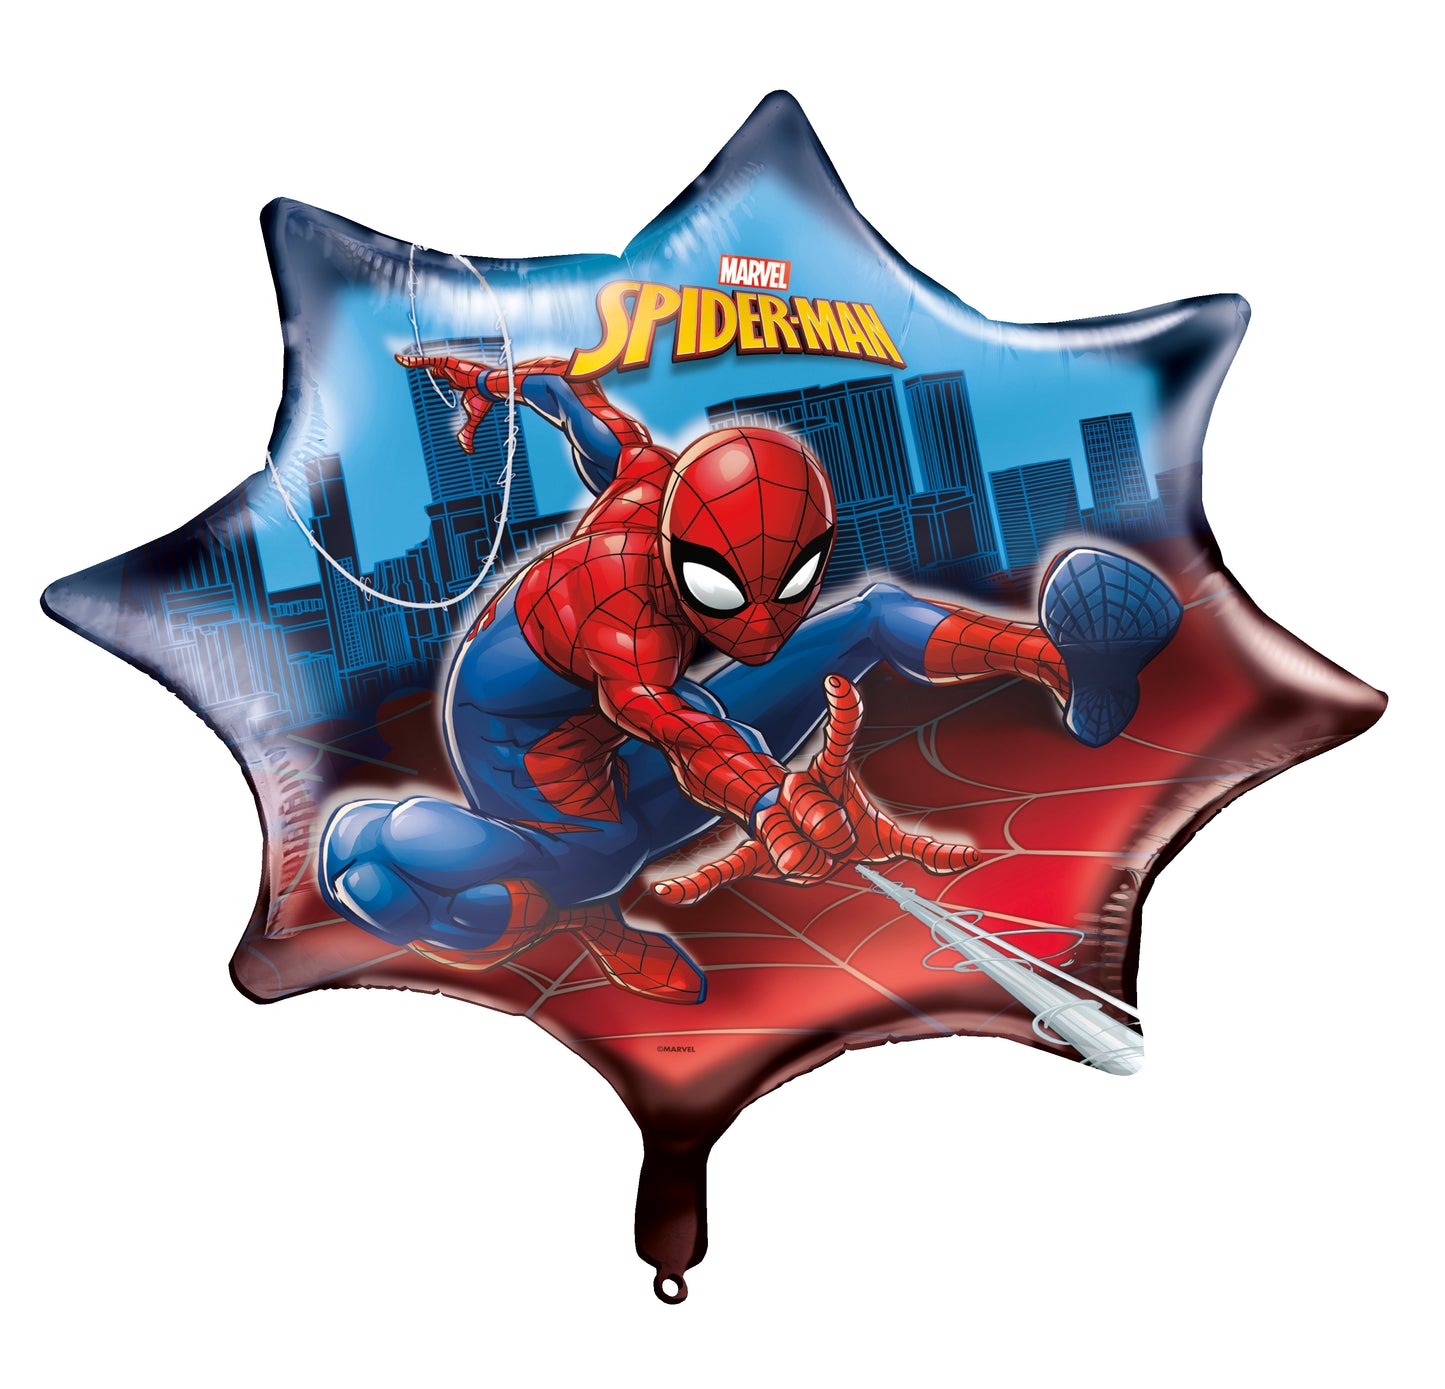 Spider-Man Giant Foil Balloon, 28"